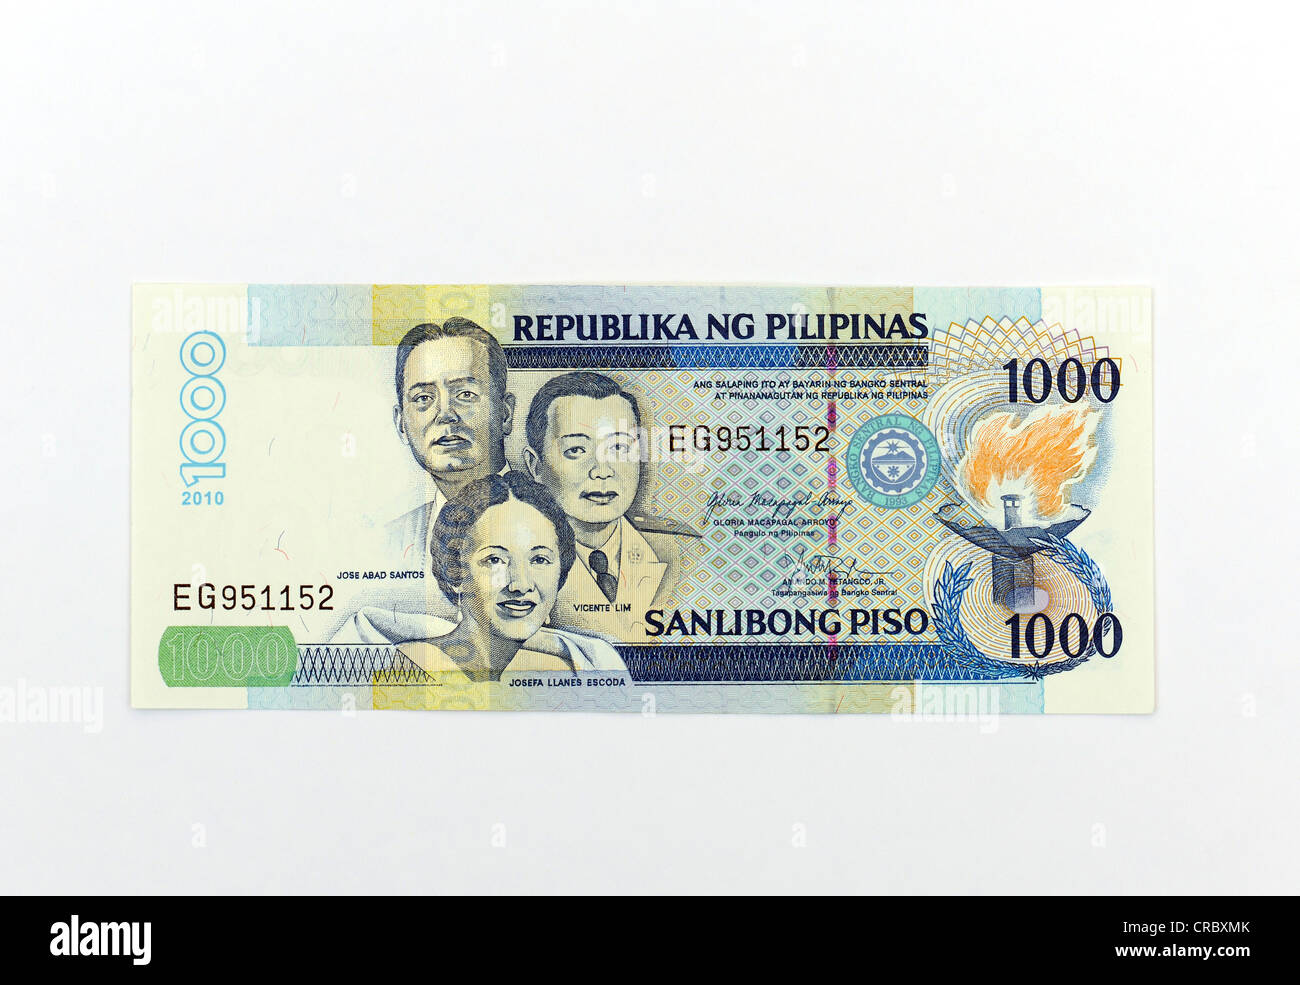 1000 Philippine pesos banknote Stock Photo